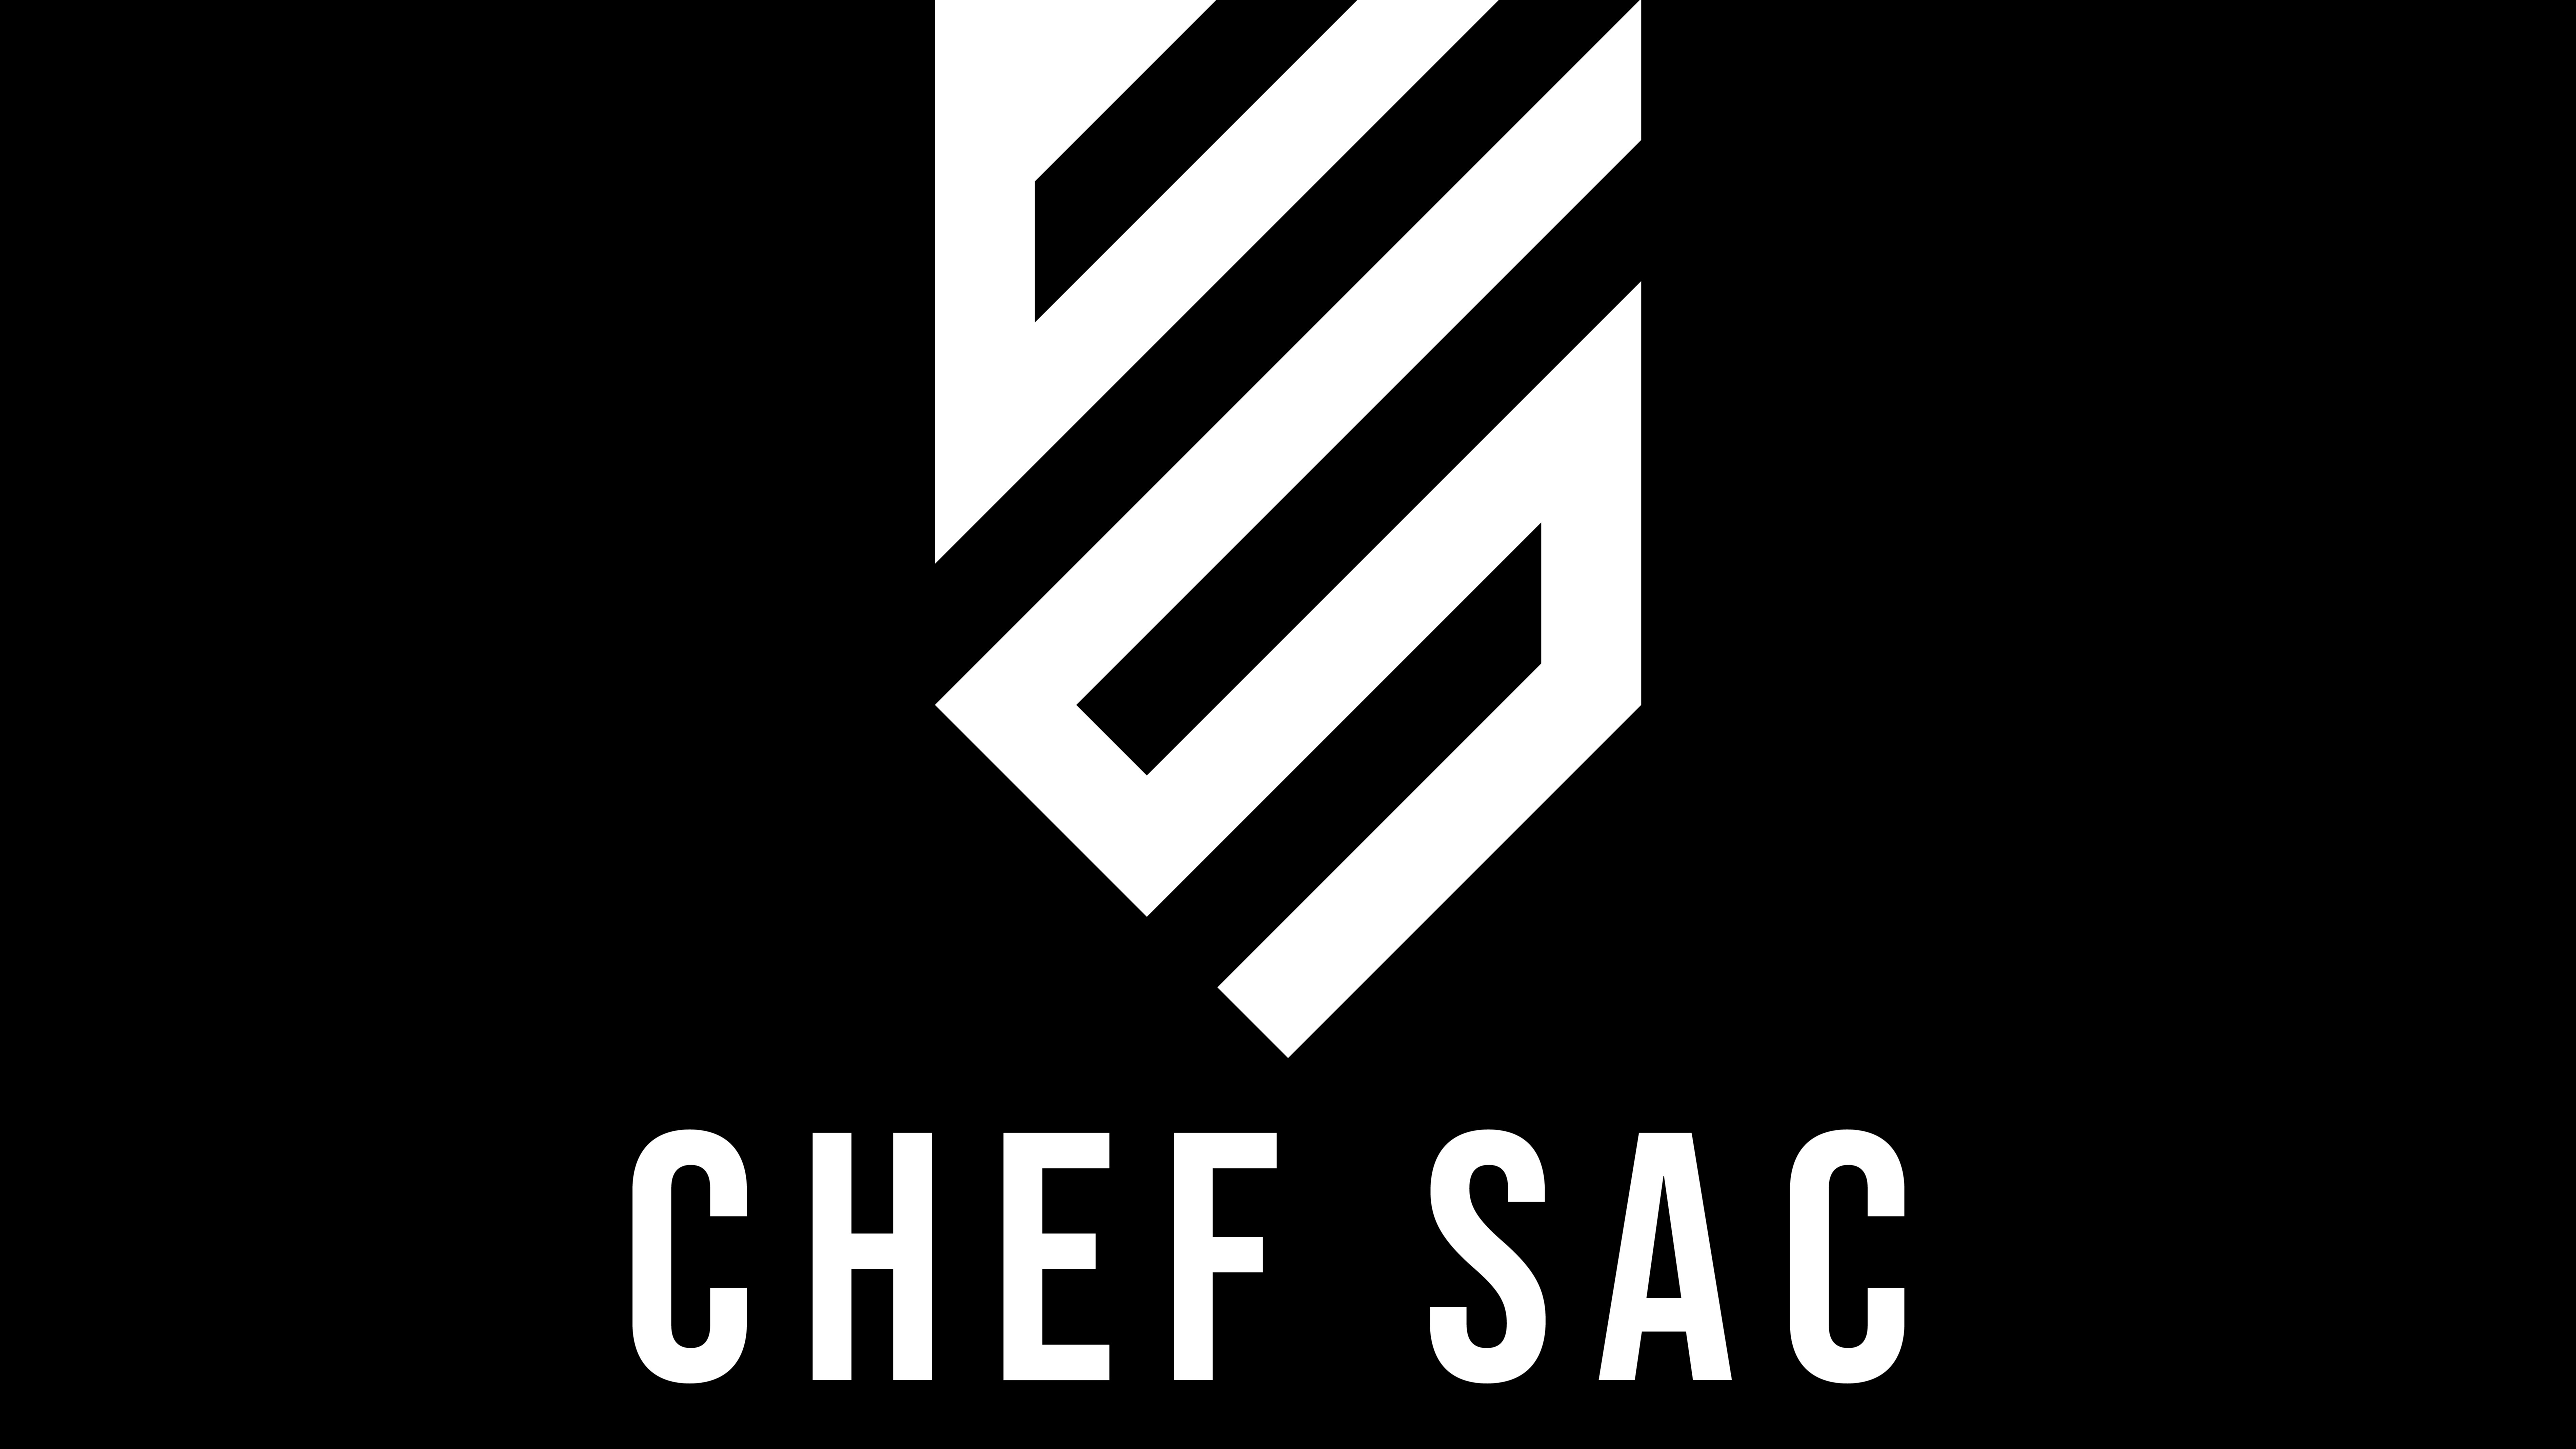 Chef Sac Just got a Brand New Logo that Reflecting Modern Culinary Gear